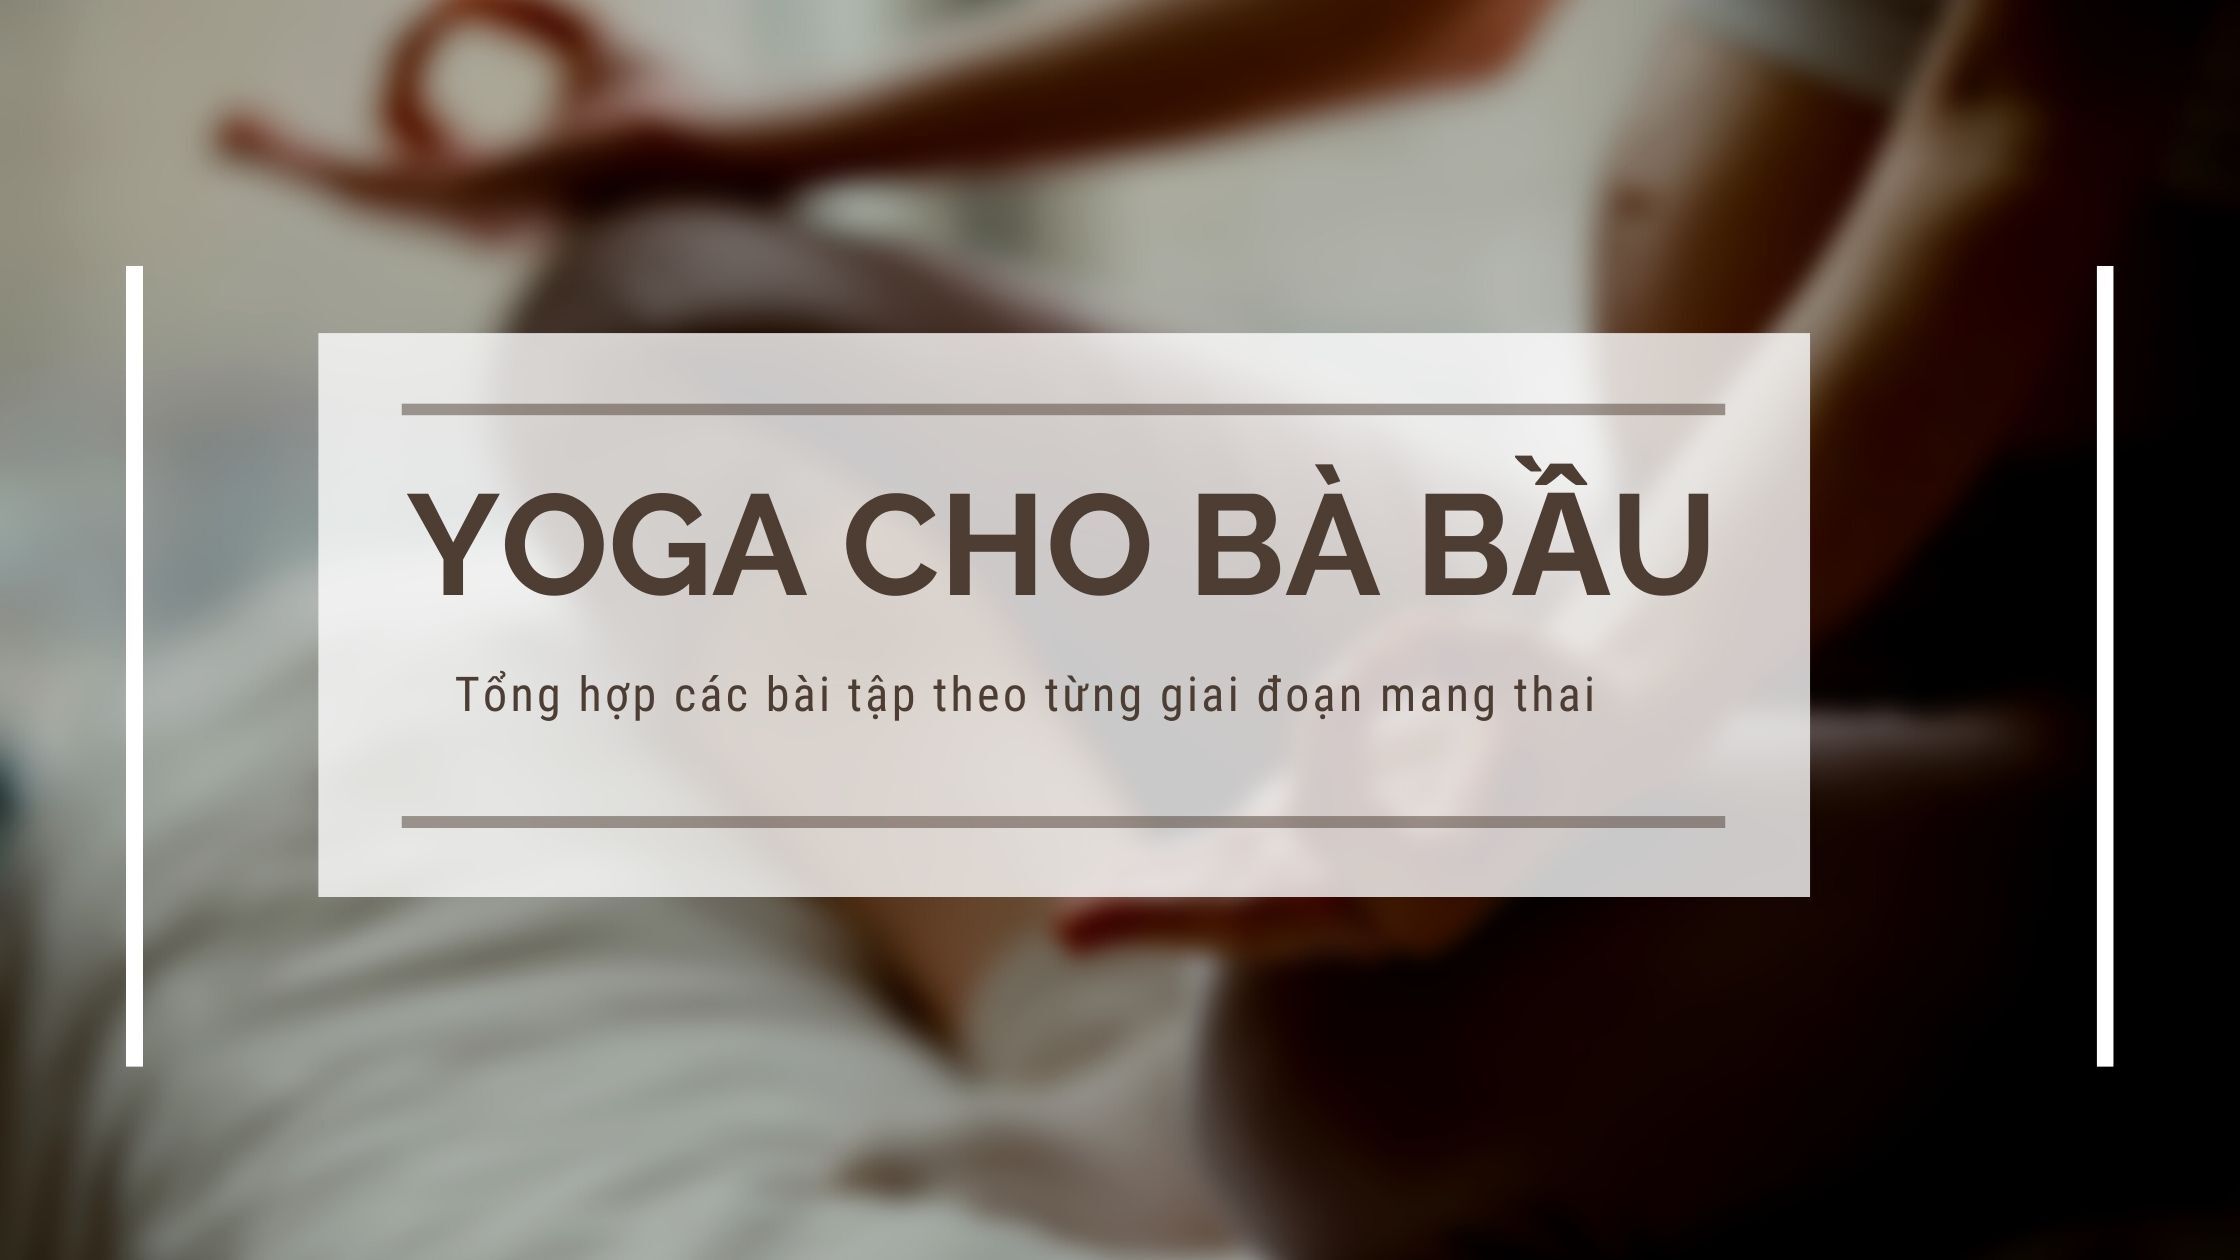 yoga cho ba bau phu hop tai nha trong nhieu giai doan mang thai - song thuan nhien